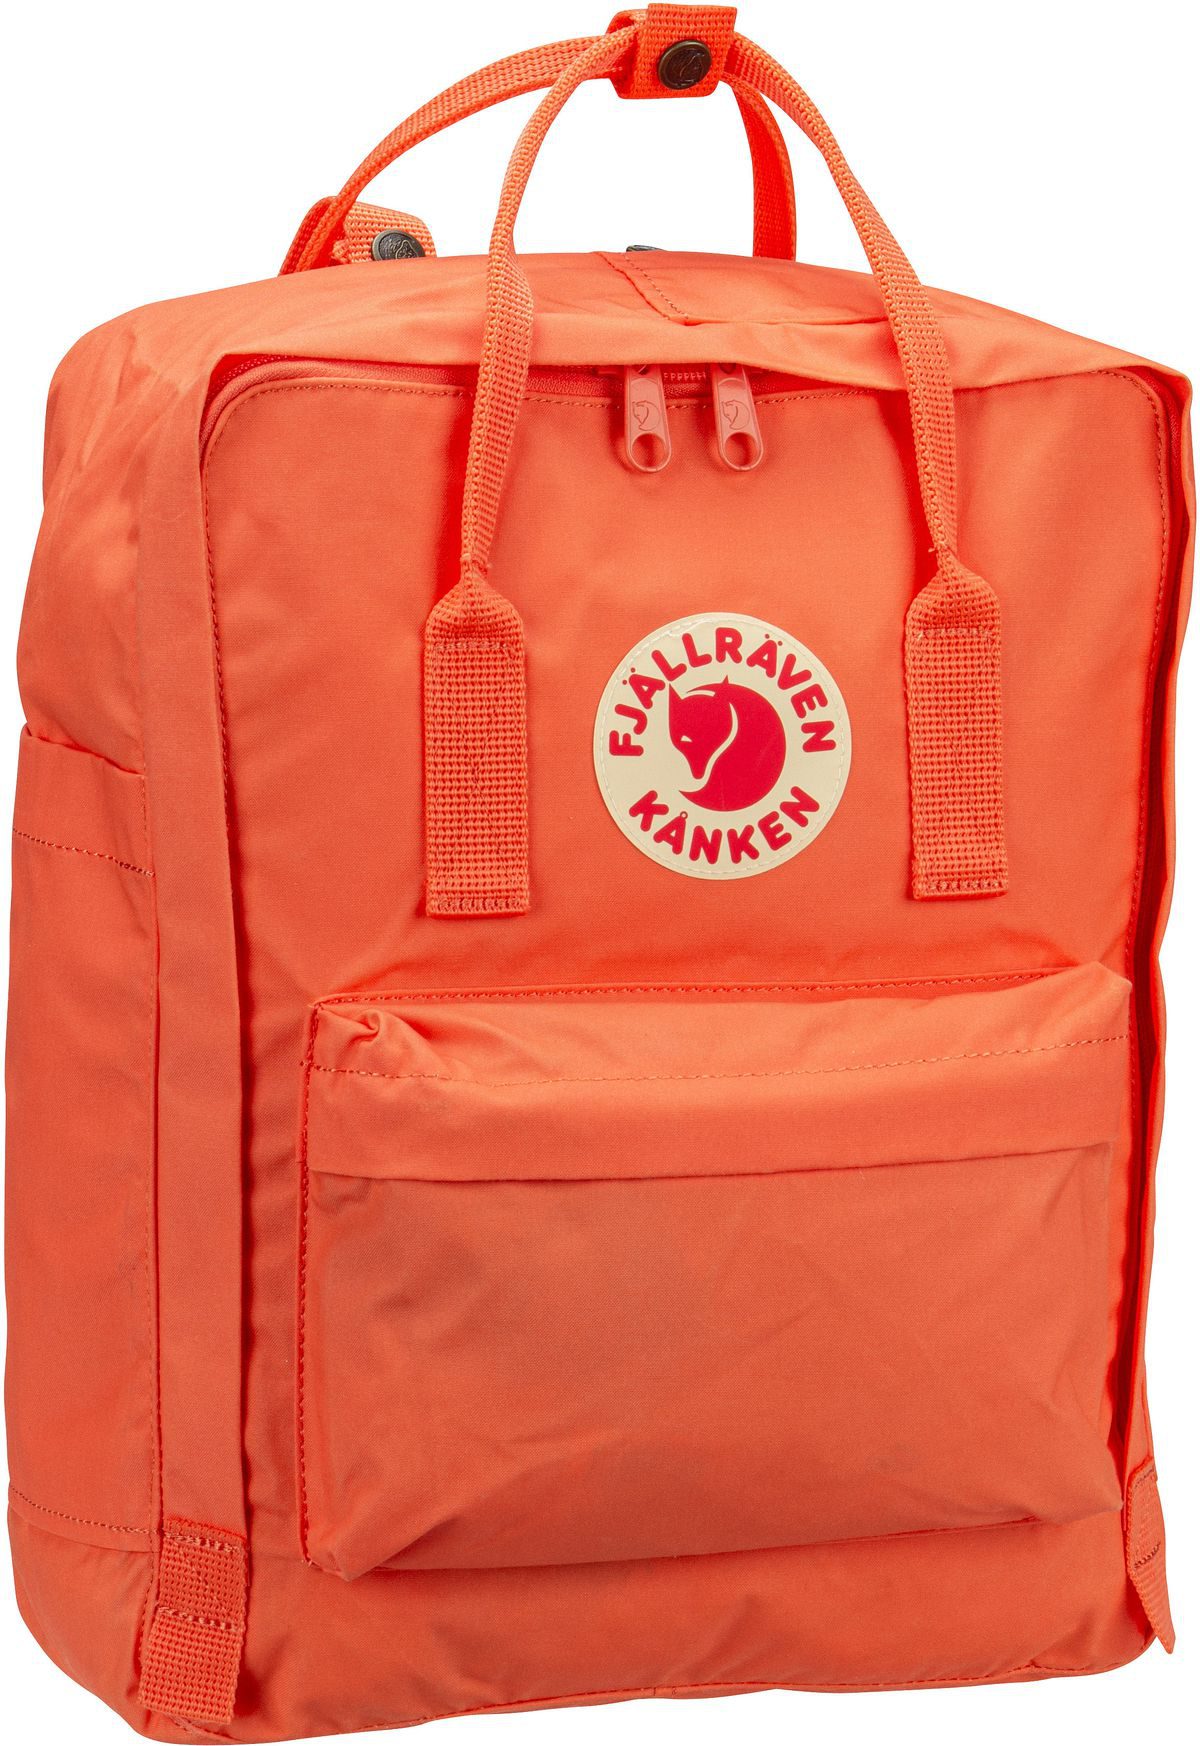 Fjällräven Kanken  in Orange (16 Liter), Rucksack / Backpack von Fjällräven